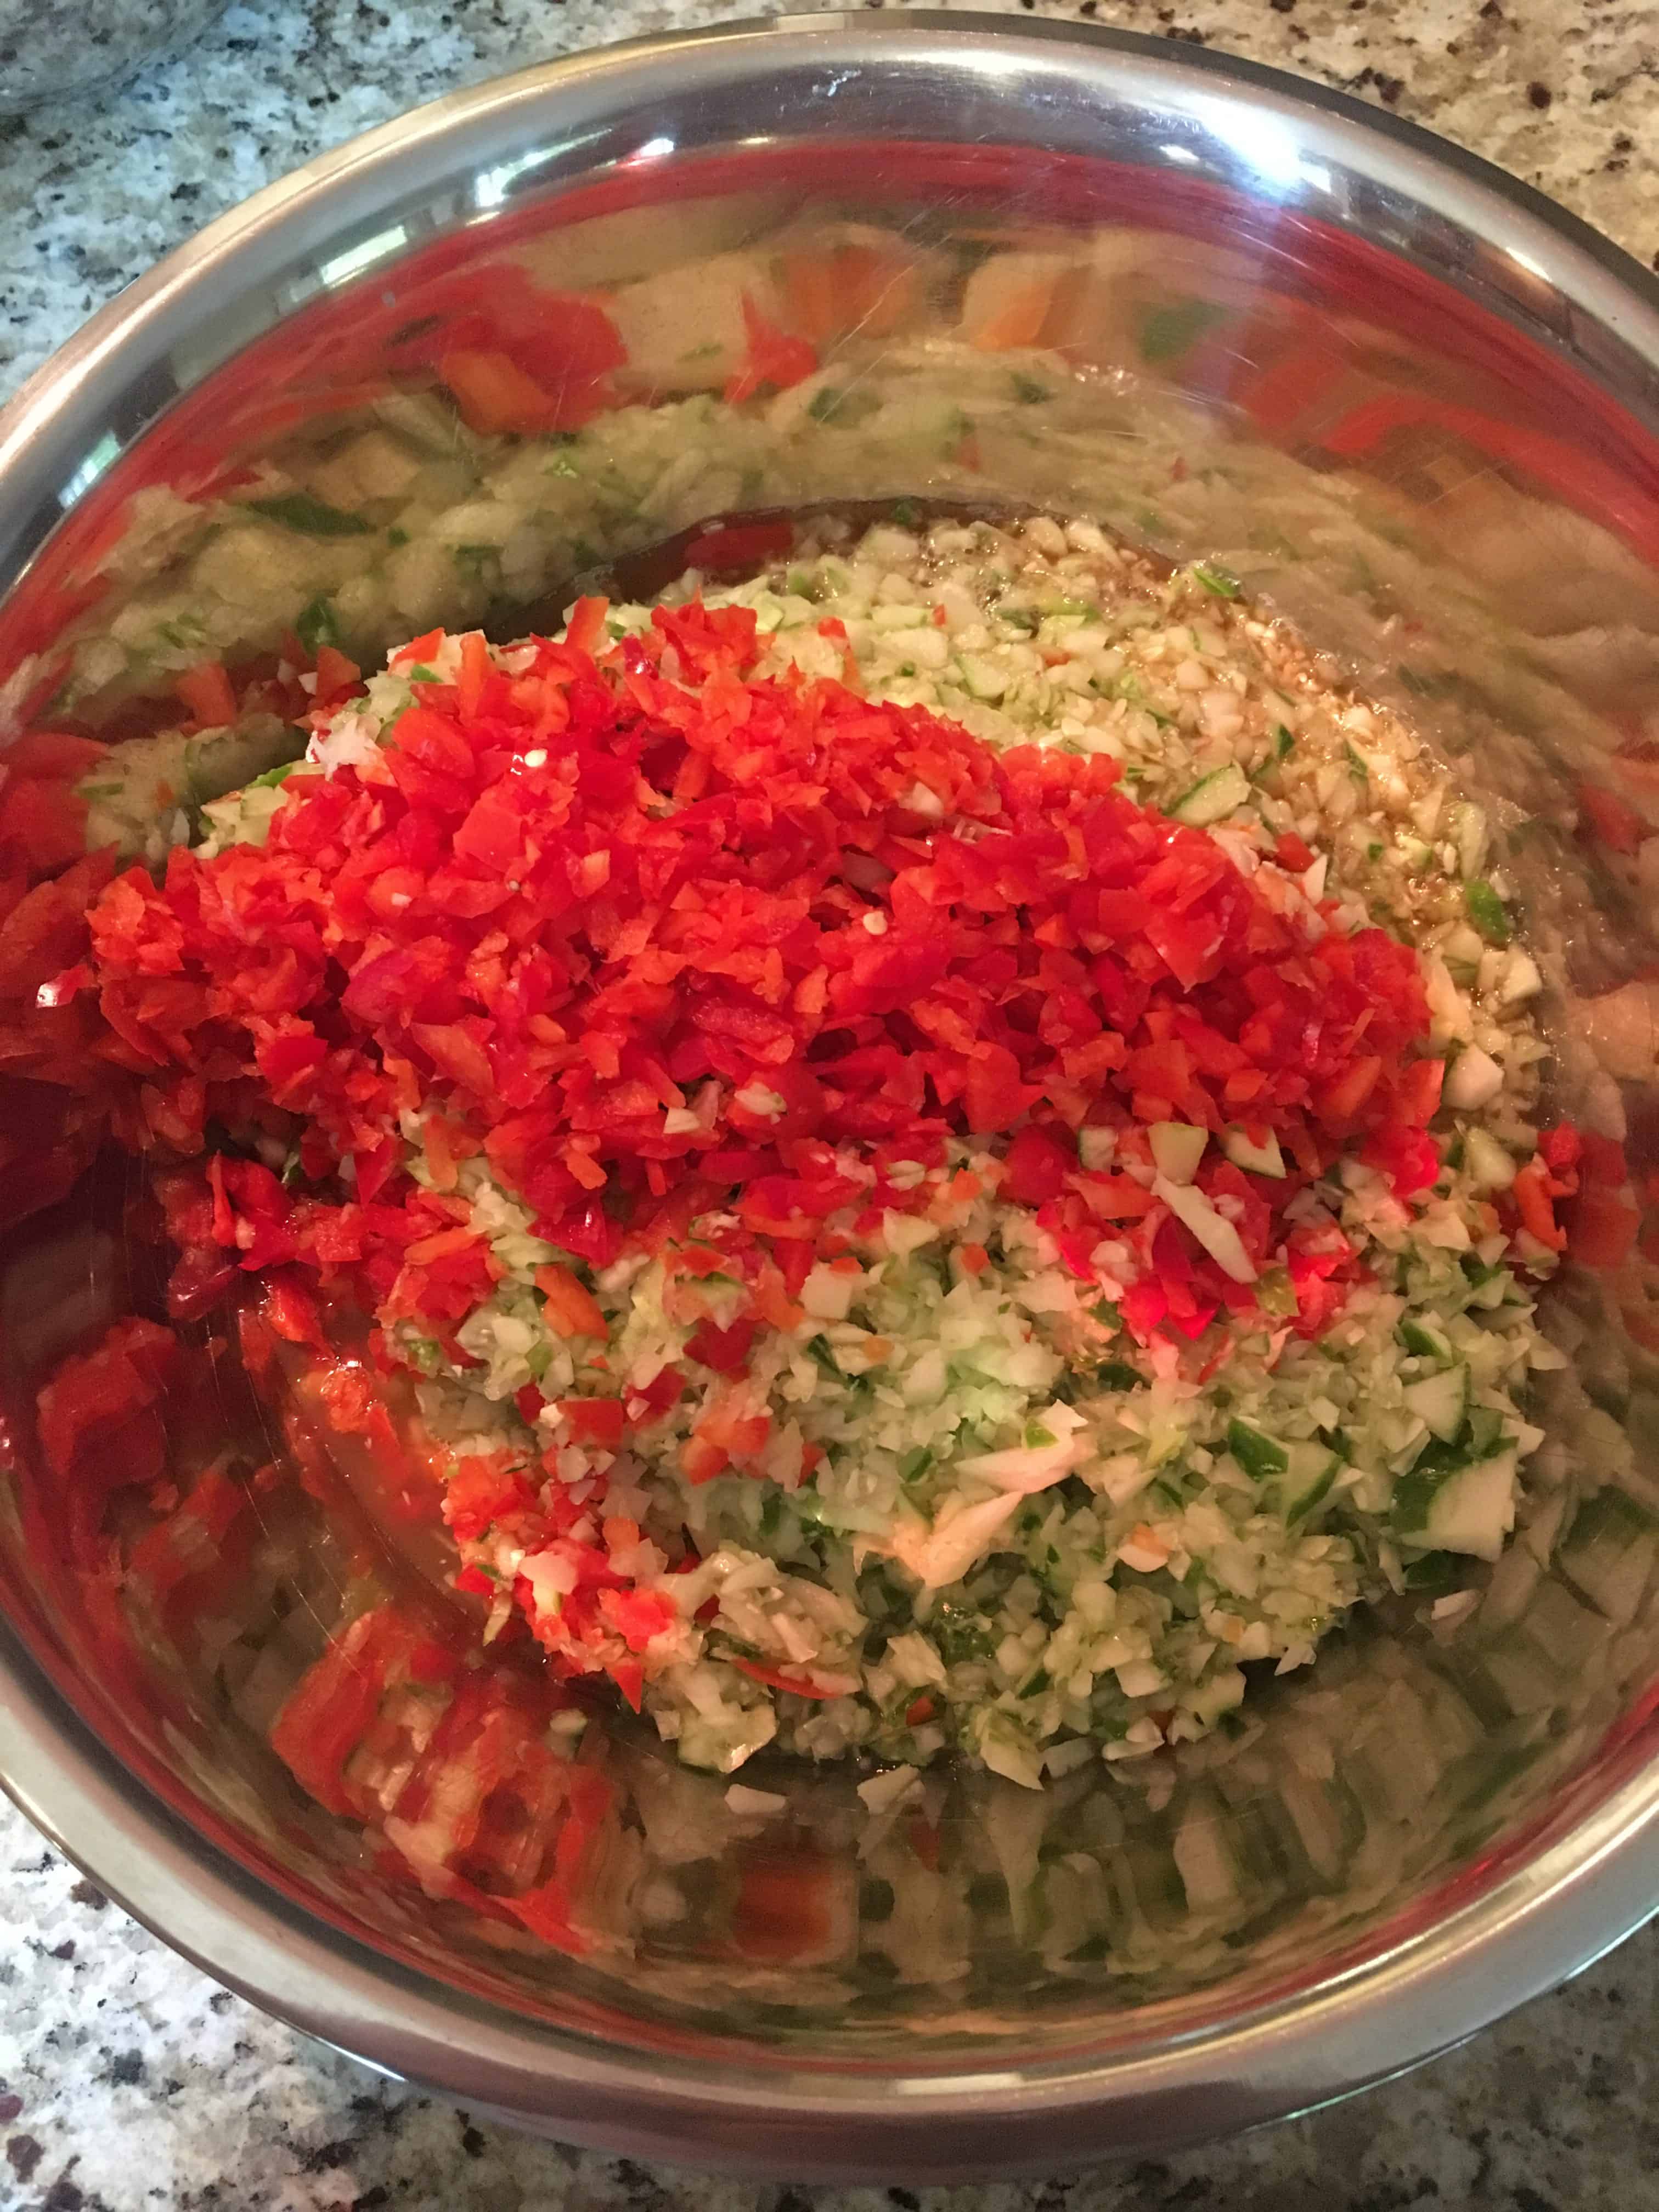 Chopped veggies for pickle relish. https://trimazing.com